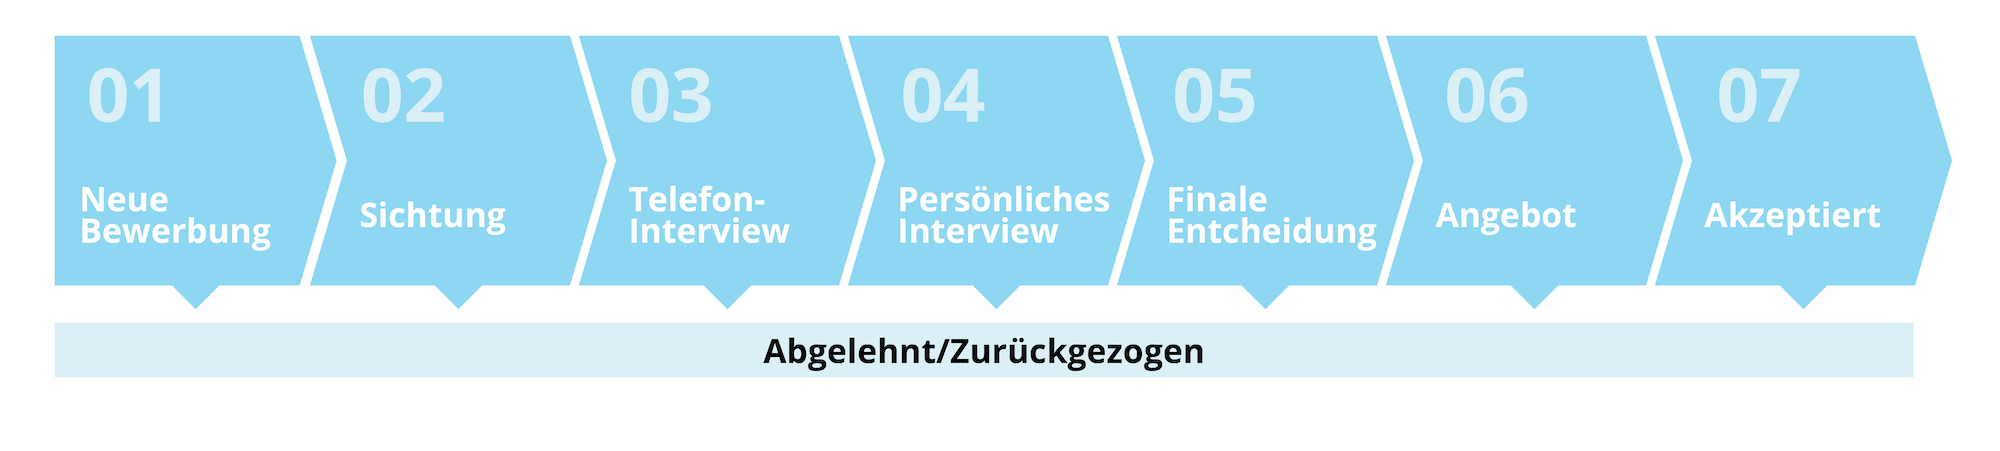 Recruiting-Process-Graphic_de.png